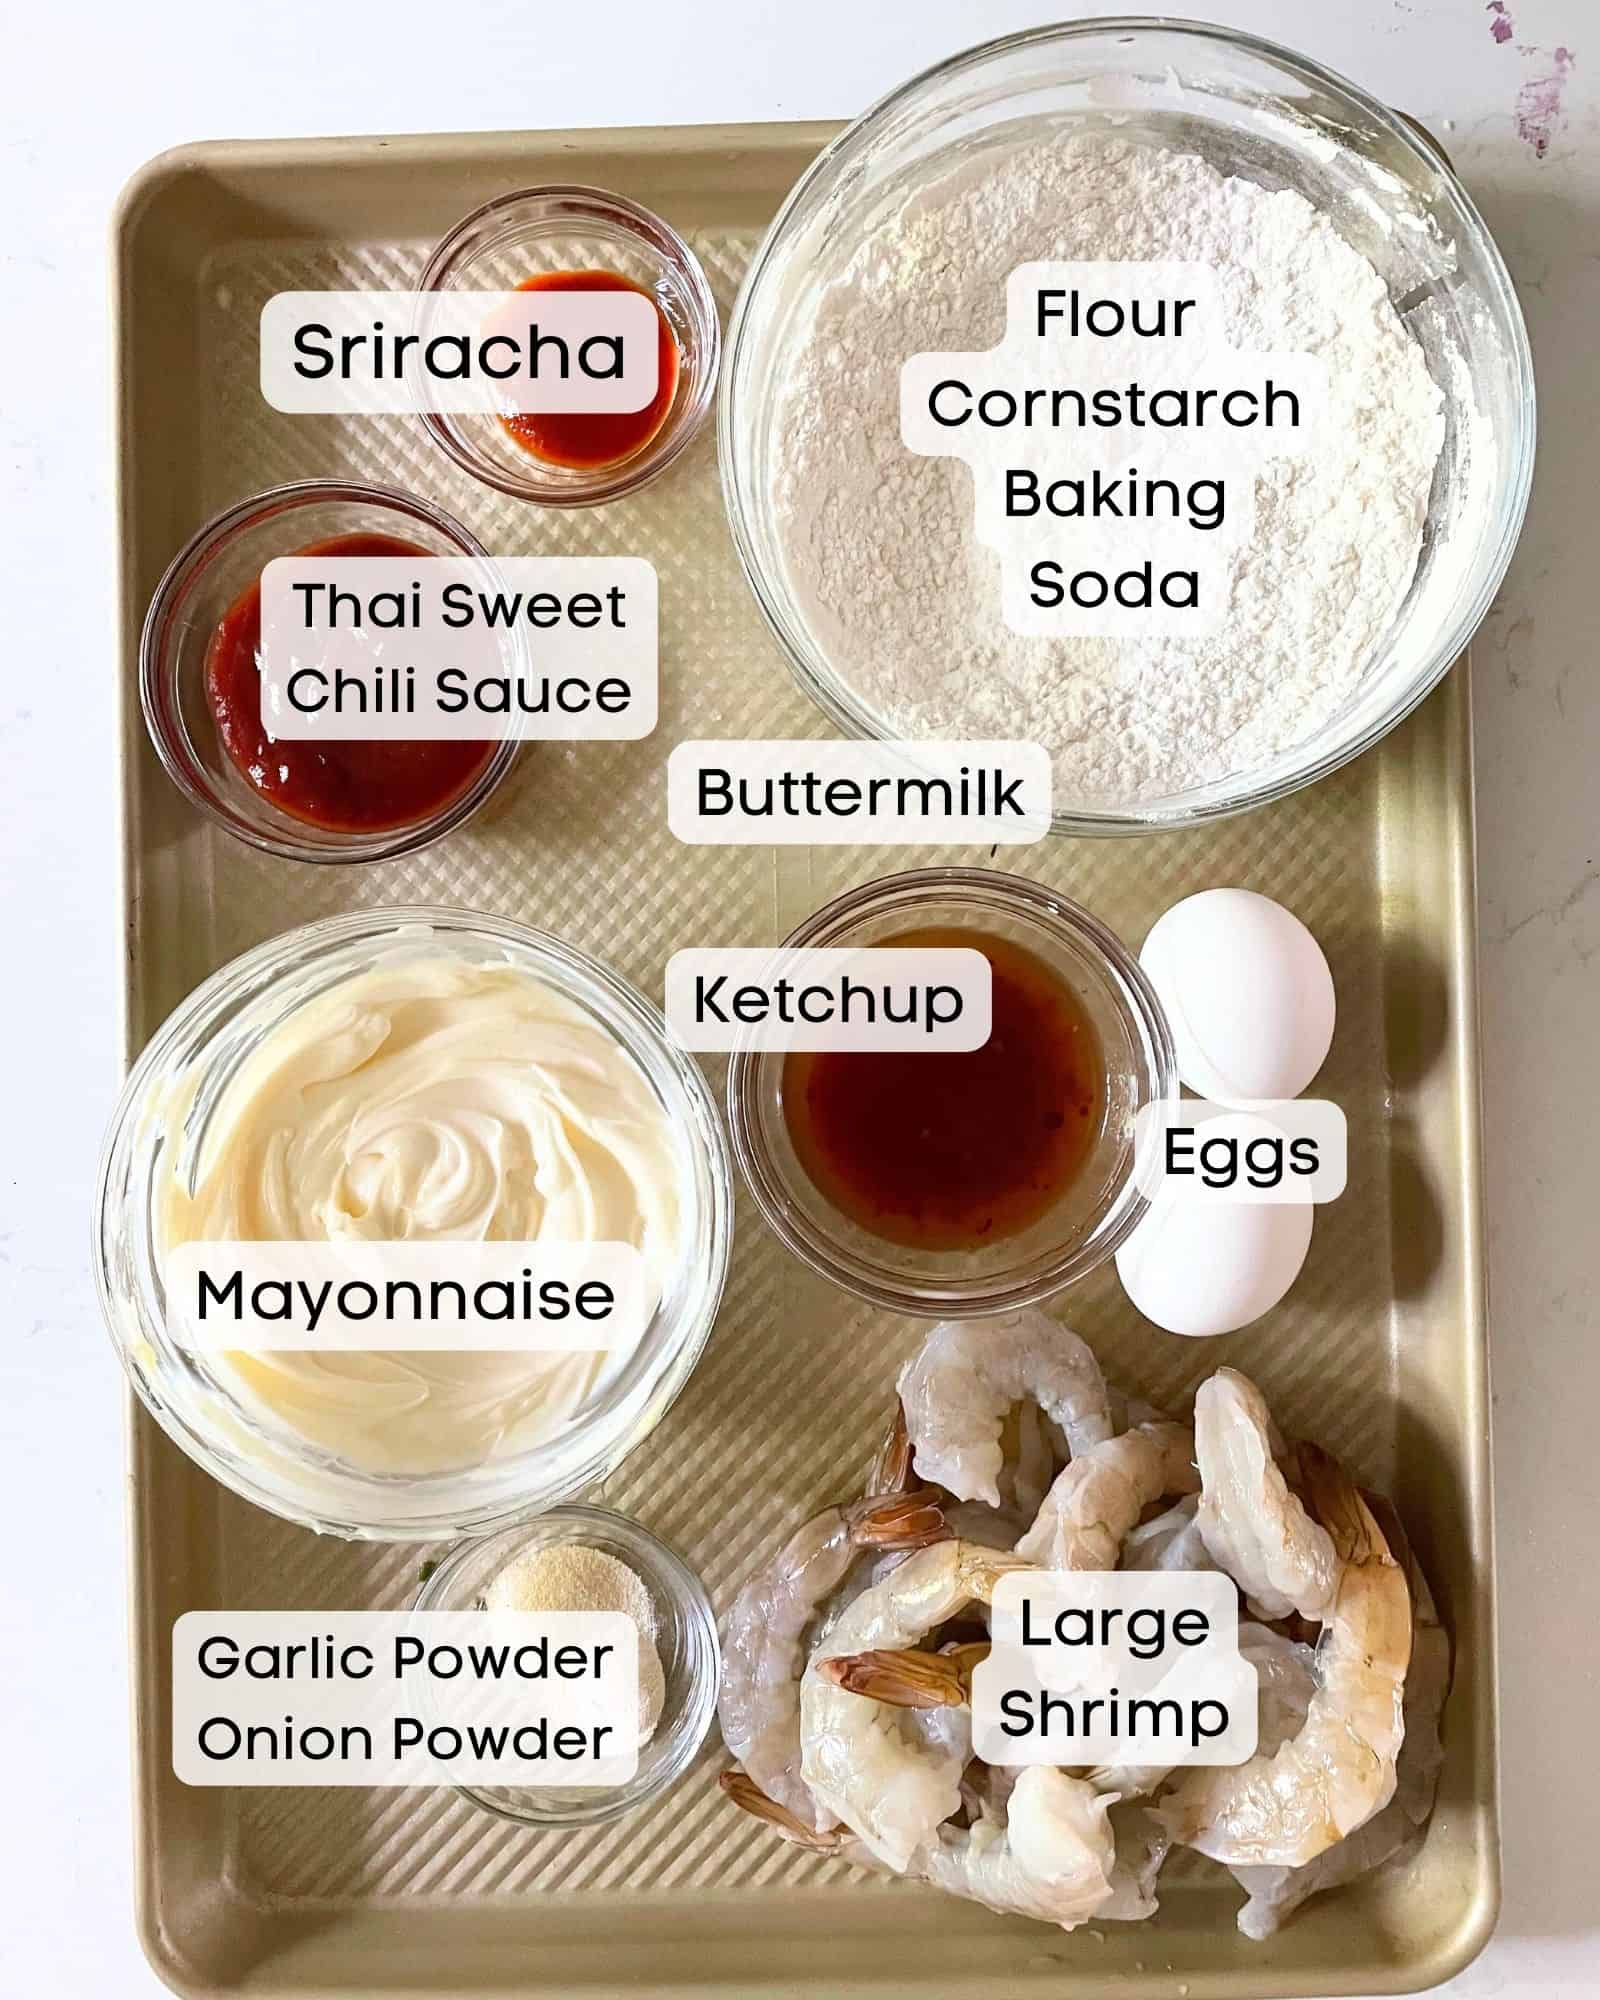 ingredients to make boom boom shrimp - large shrimp, mayonnaise, sriracha, sweet chili sauce, flour, cornstarch, baking soda, garlic powder, eggs, buttermilk, ketchup, and salt.